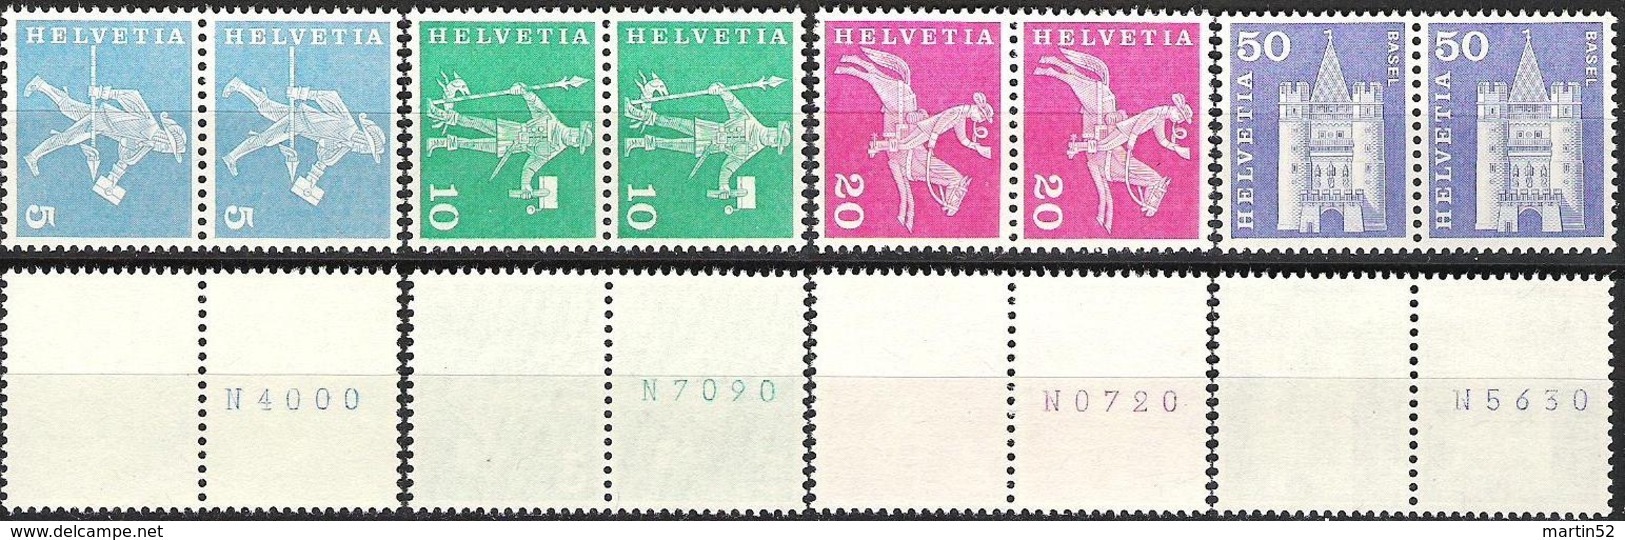 Schweiz Suisse 1960: Rollen-Rouleaux-Coil Zu 355/363R Mi 696/704R Yv 643/65 Avec+sans Numéro (se-tenant)(Zu CHF 38.50) - Franqueo